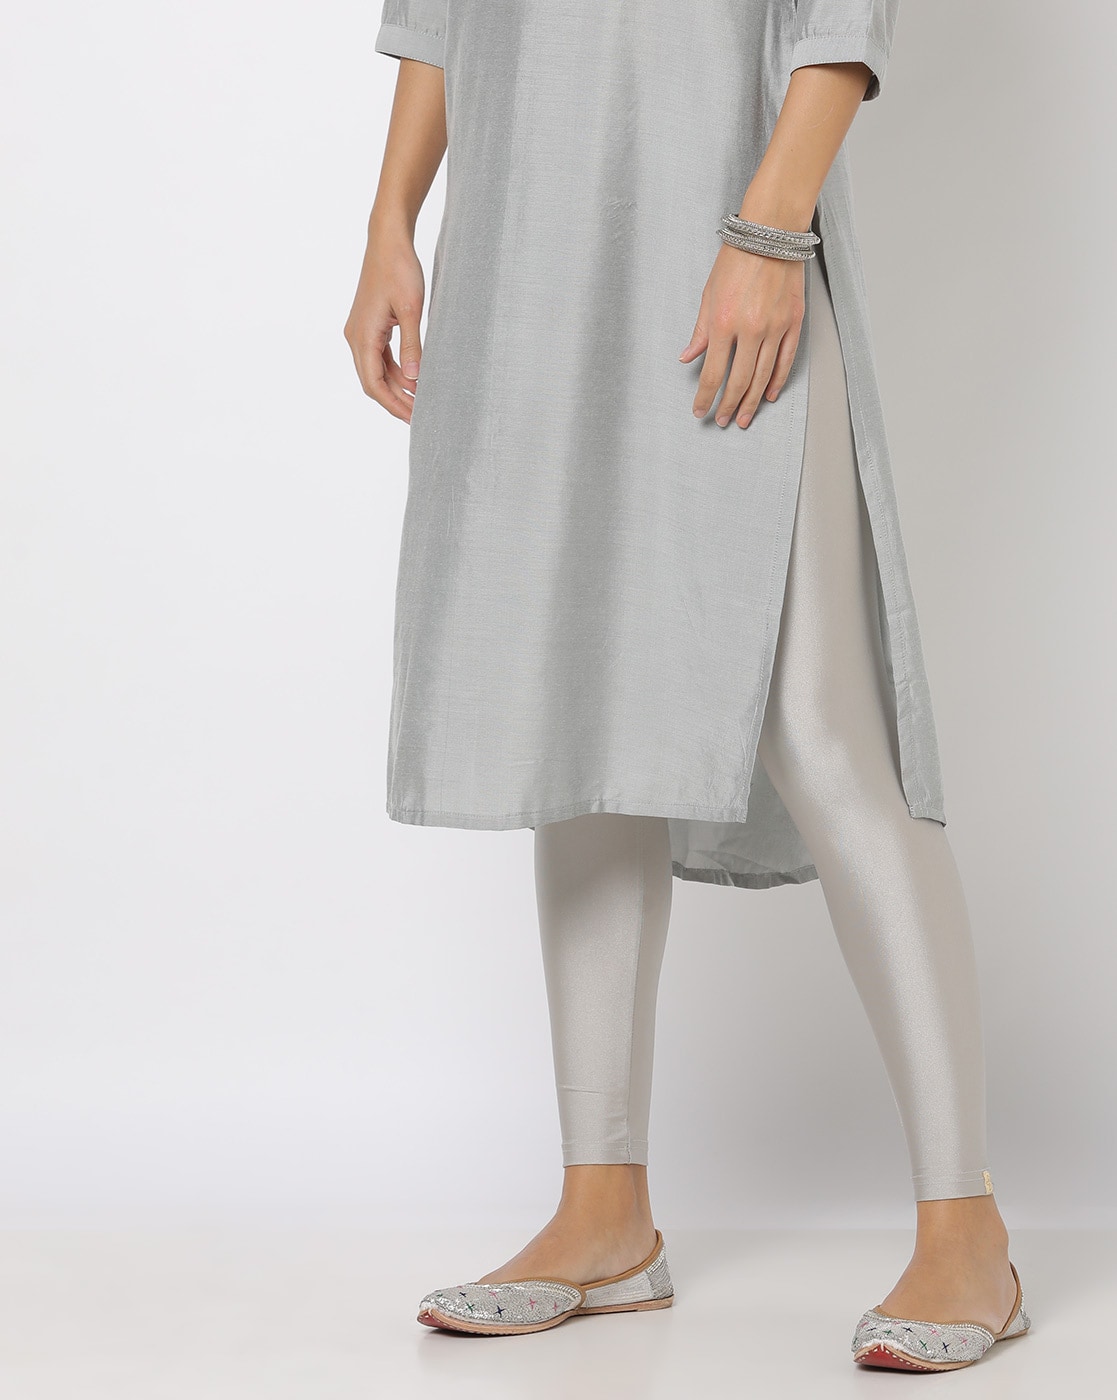 Buy Grey Leggings for Women by Go Colors Online | Ajio.com